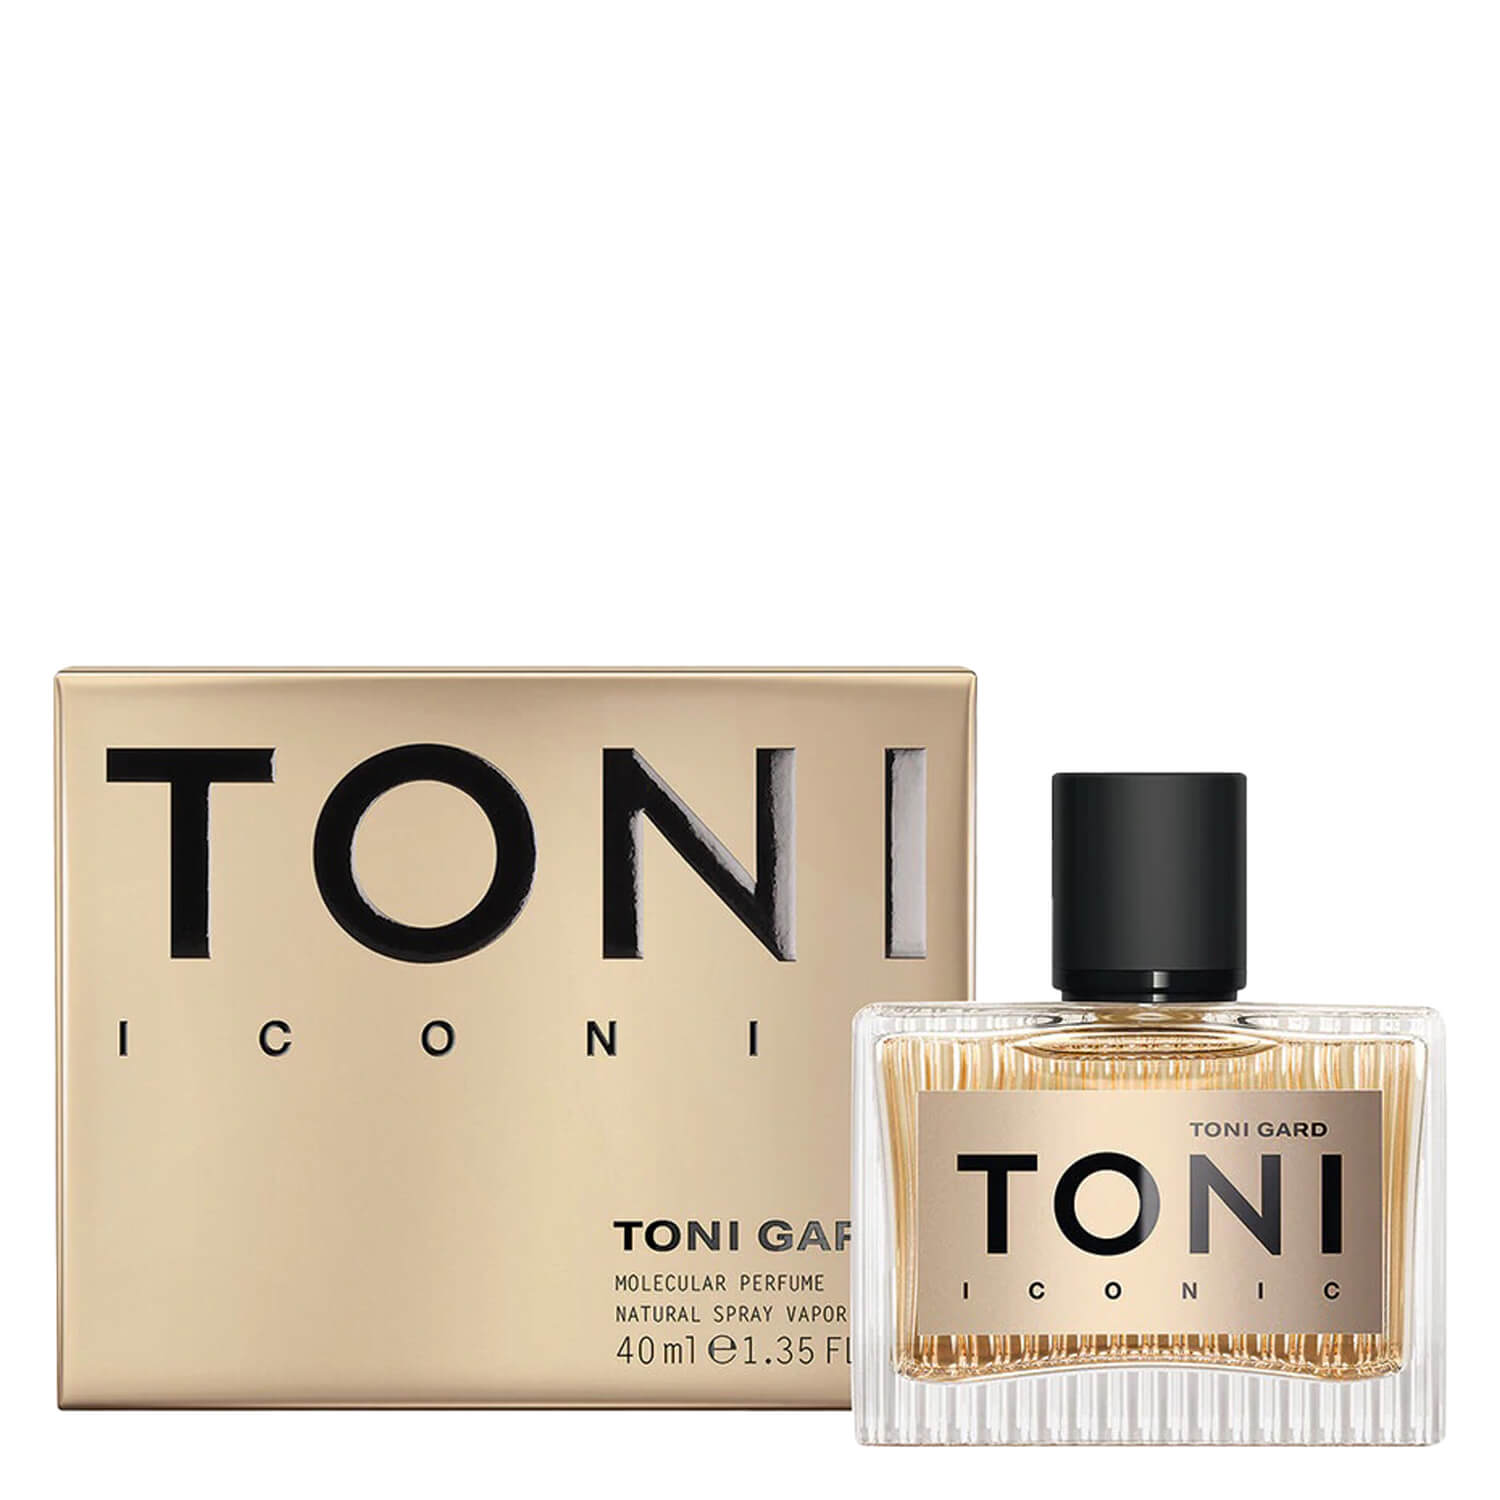 TONI GARD - Toni Iconic Woman Eau de Parfum